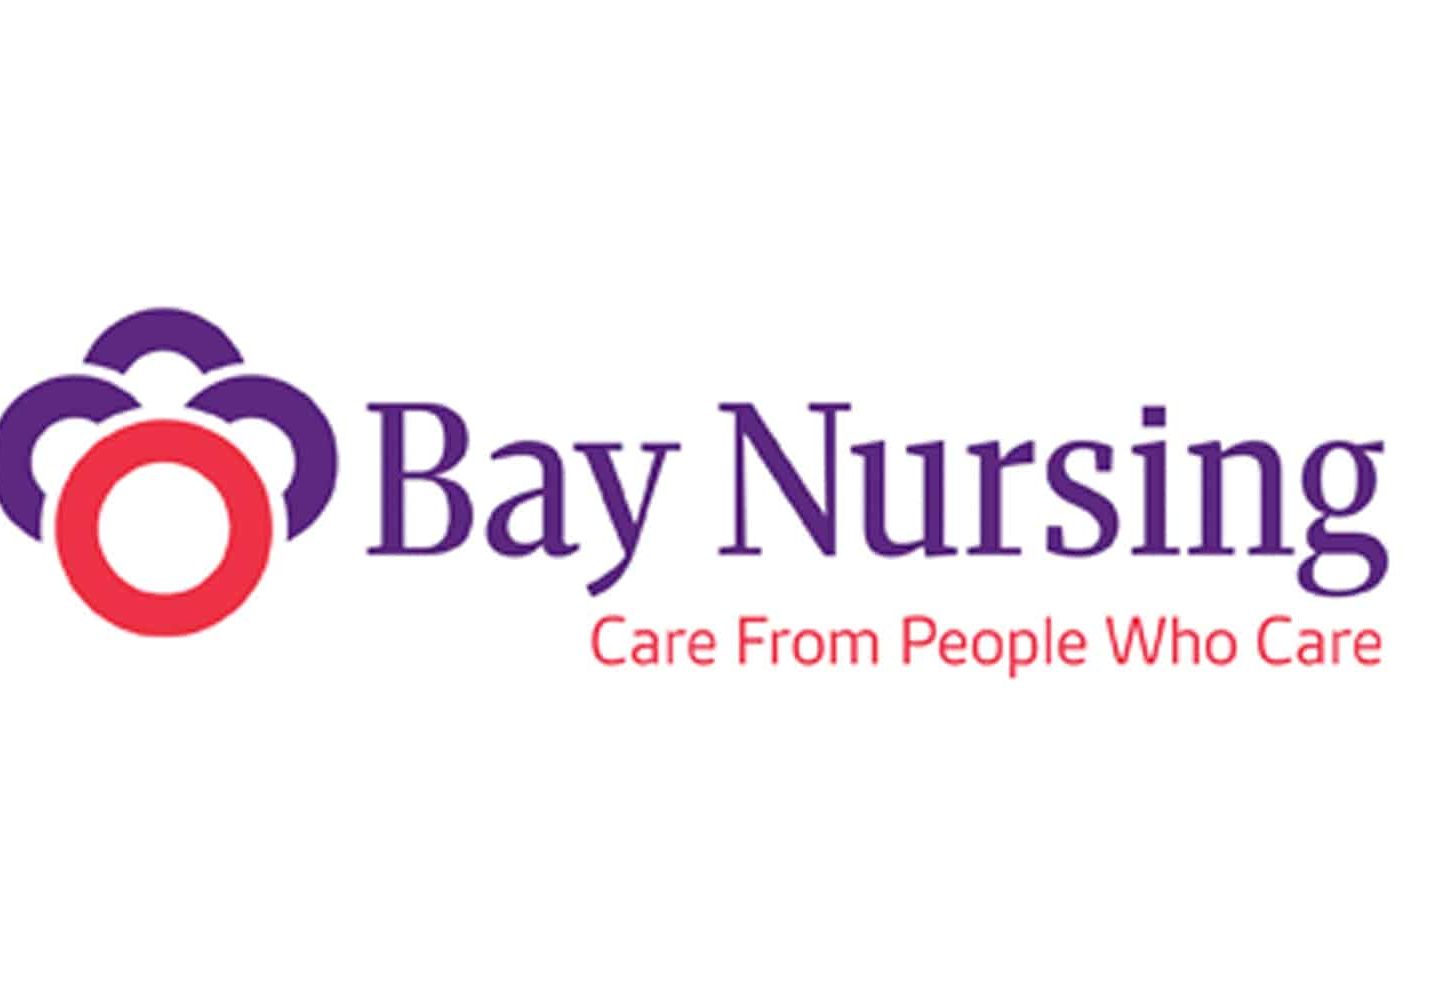 Bay Nursing Celebrates 25th Anniversary